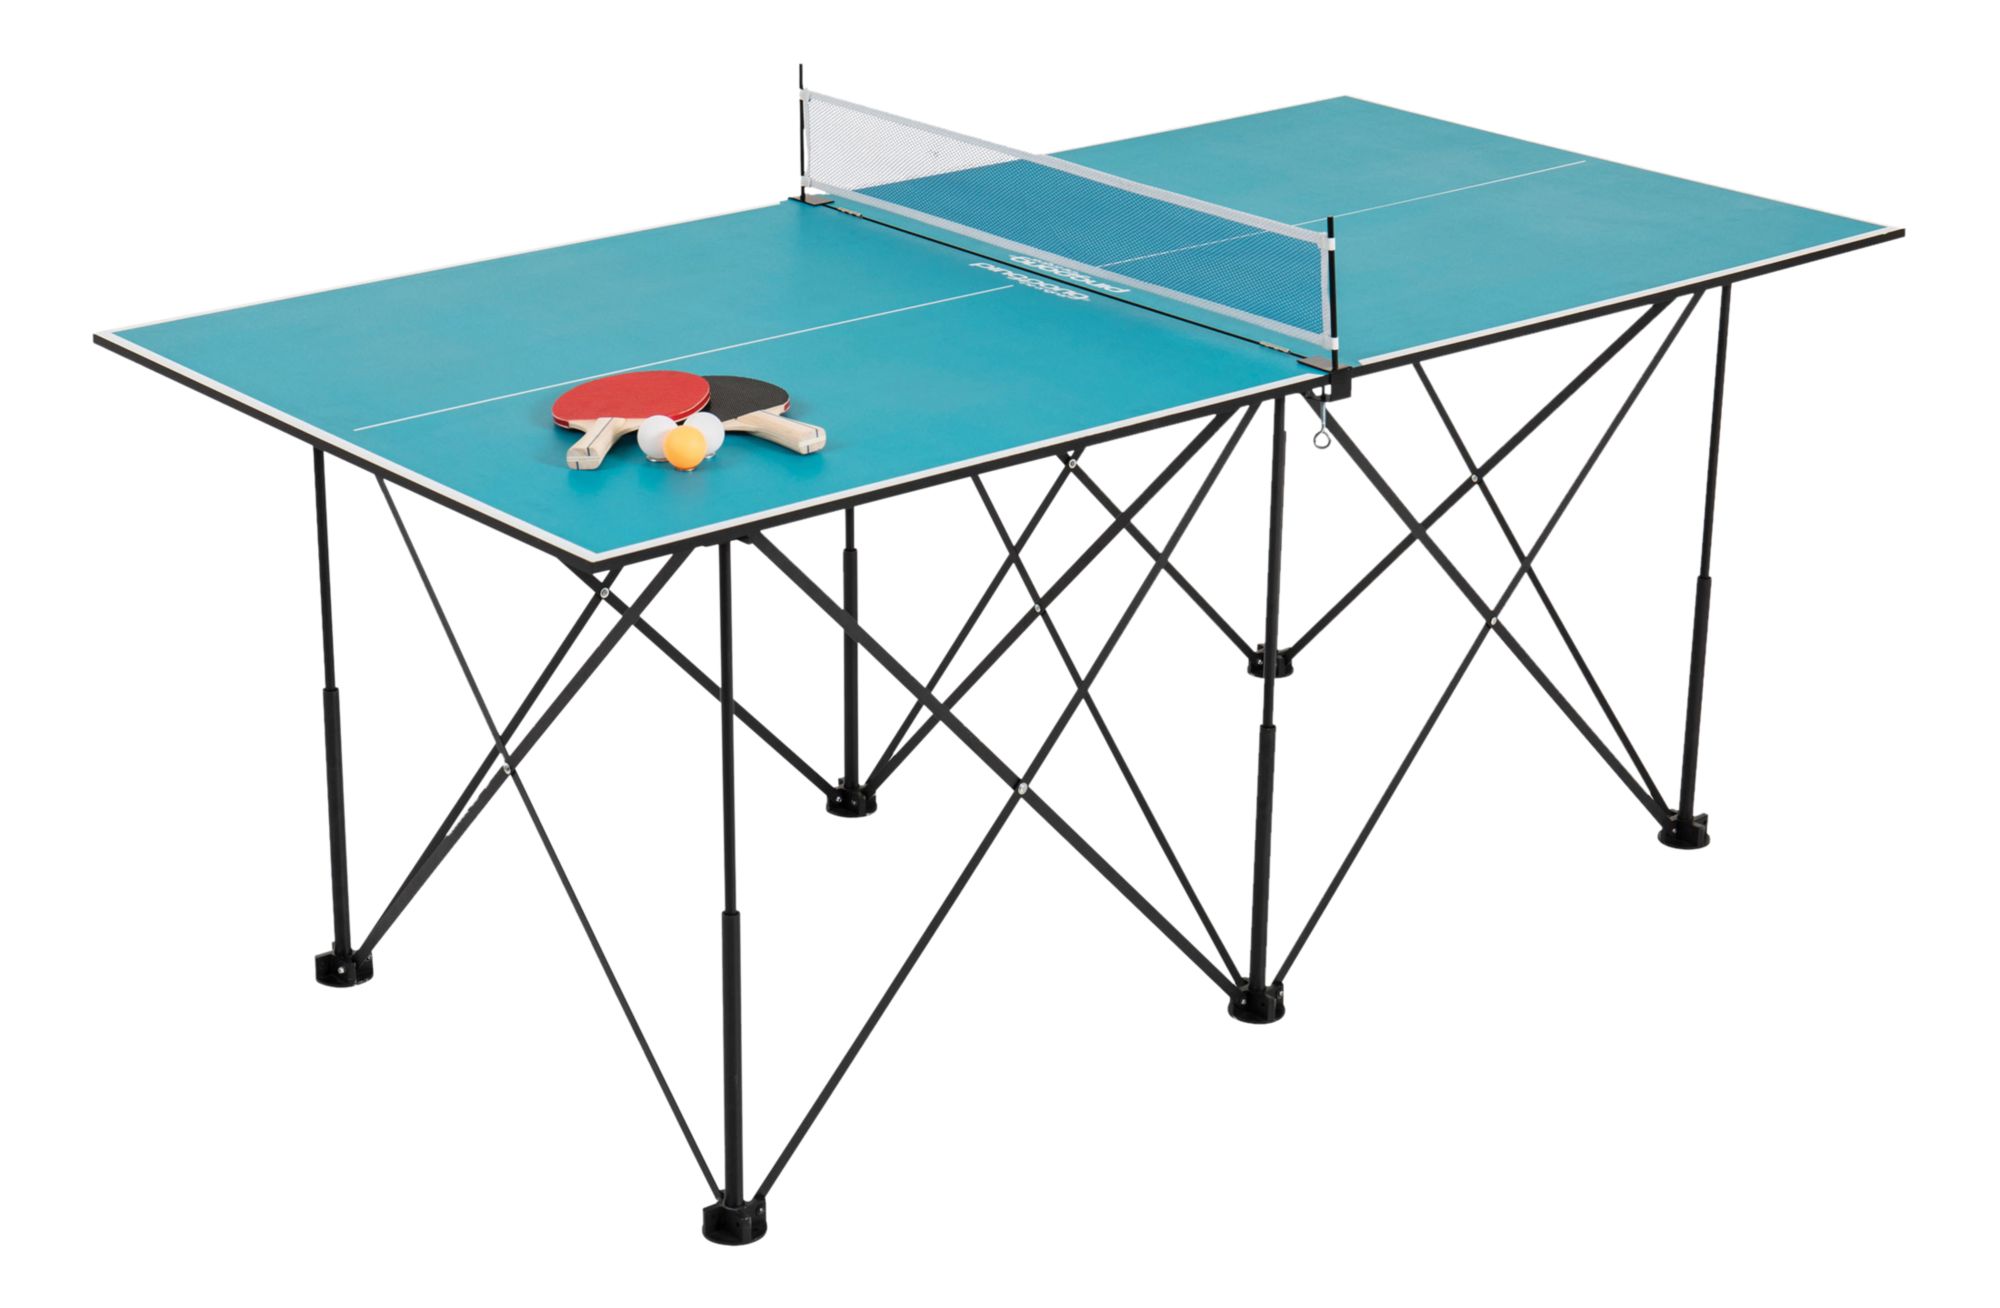 table tennis set